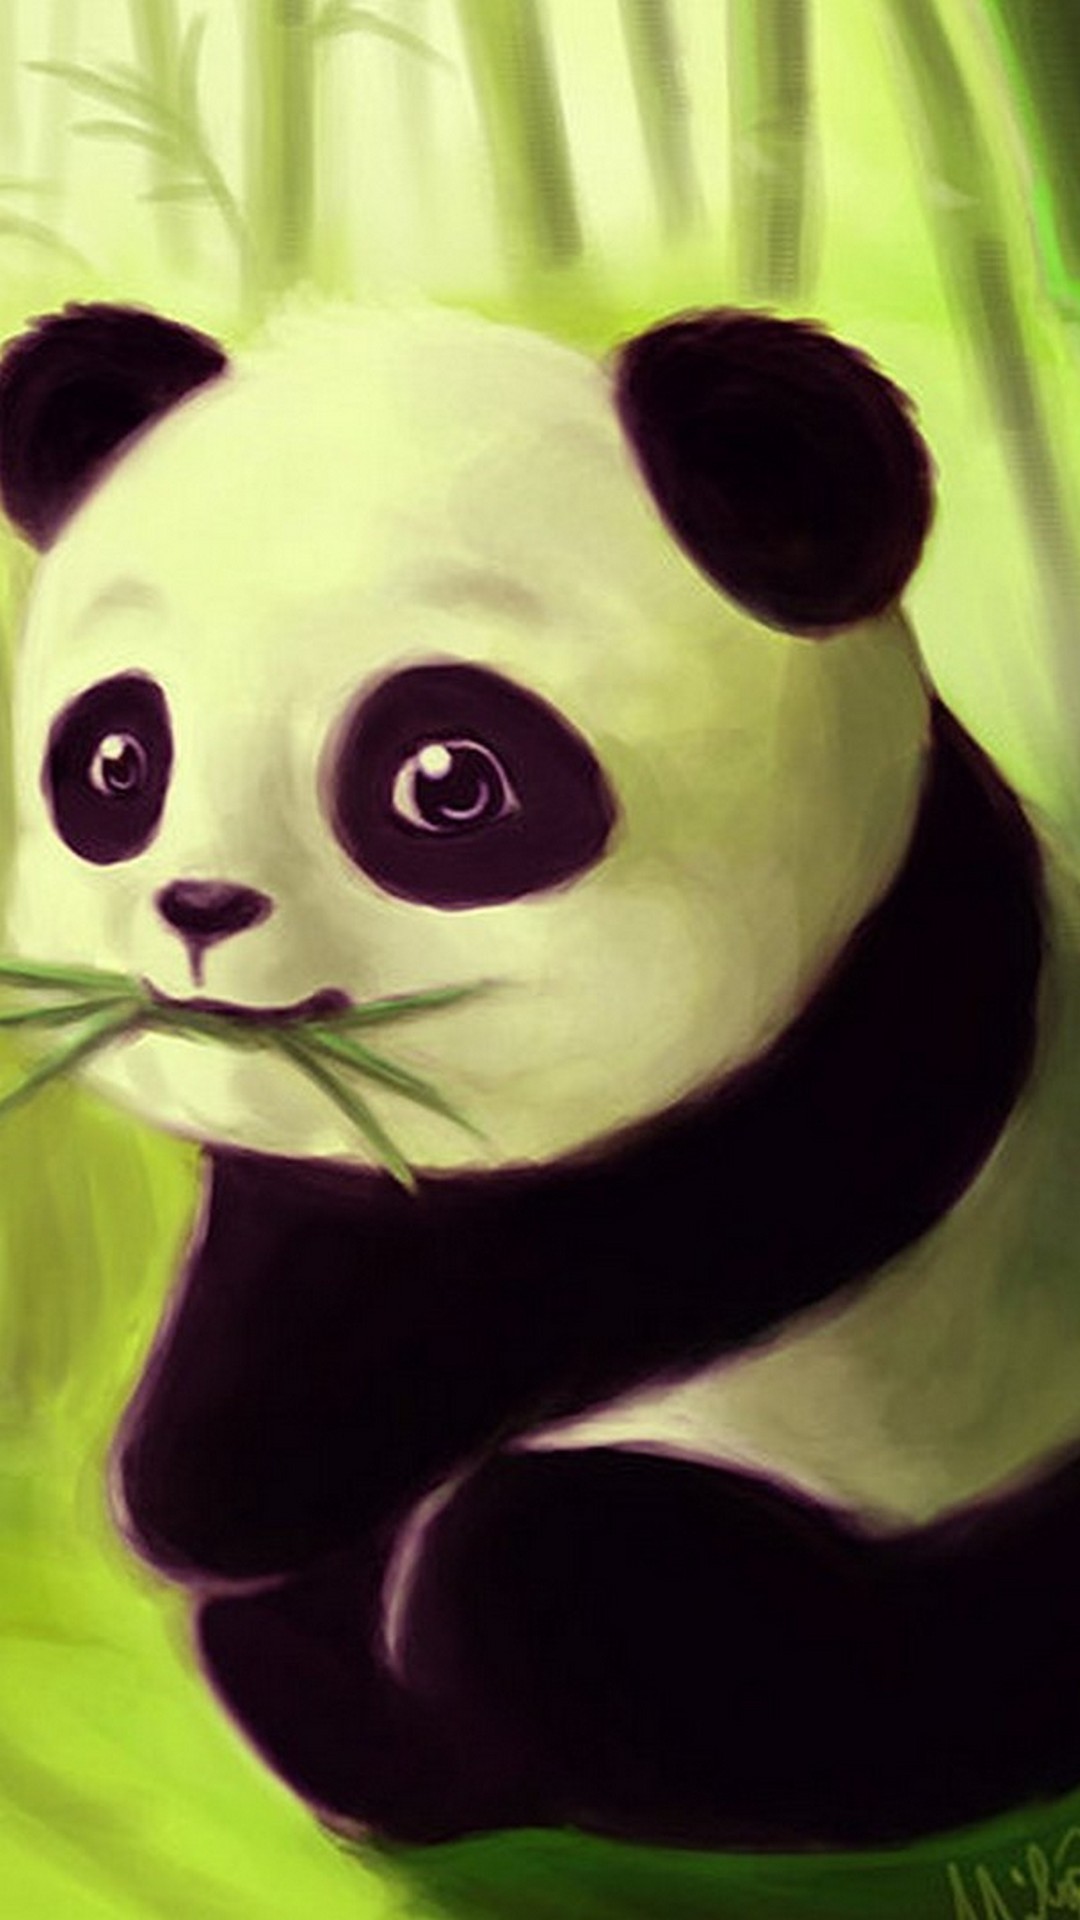 Wallpaper Android Baby Panda High Resolution 1080X1920